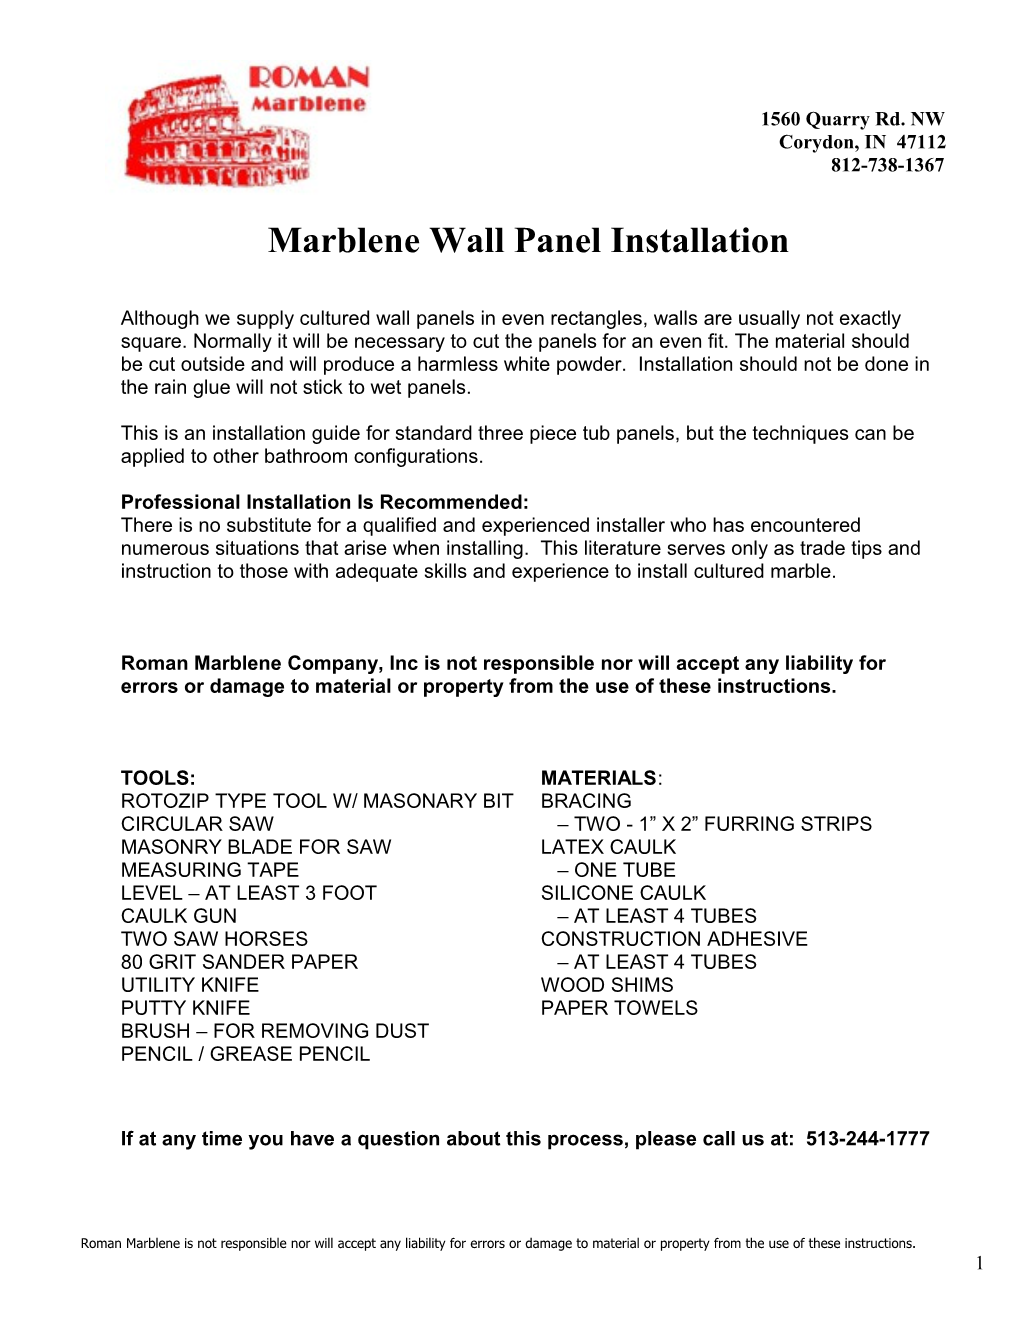 Marblene Wall Panel Installation